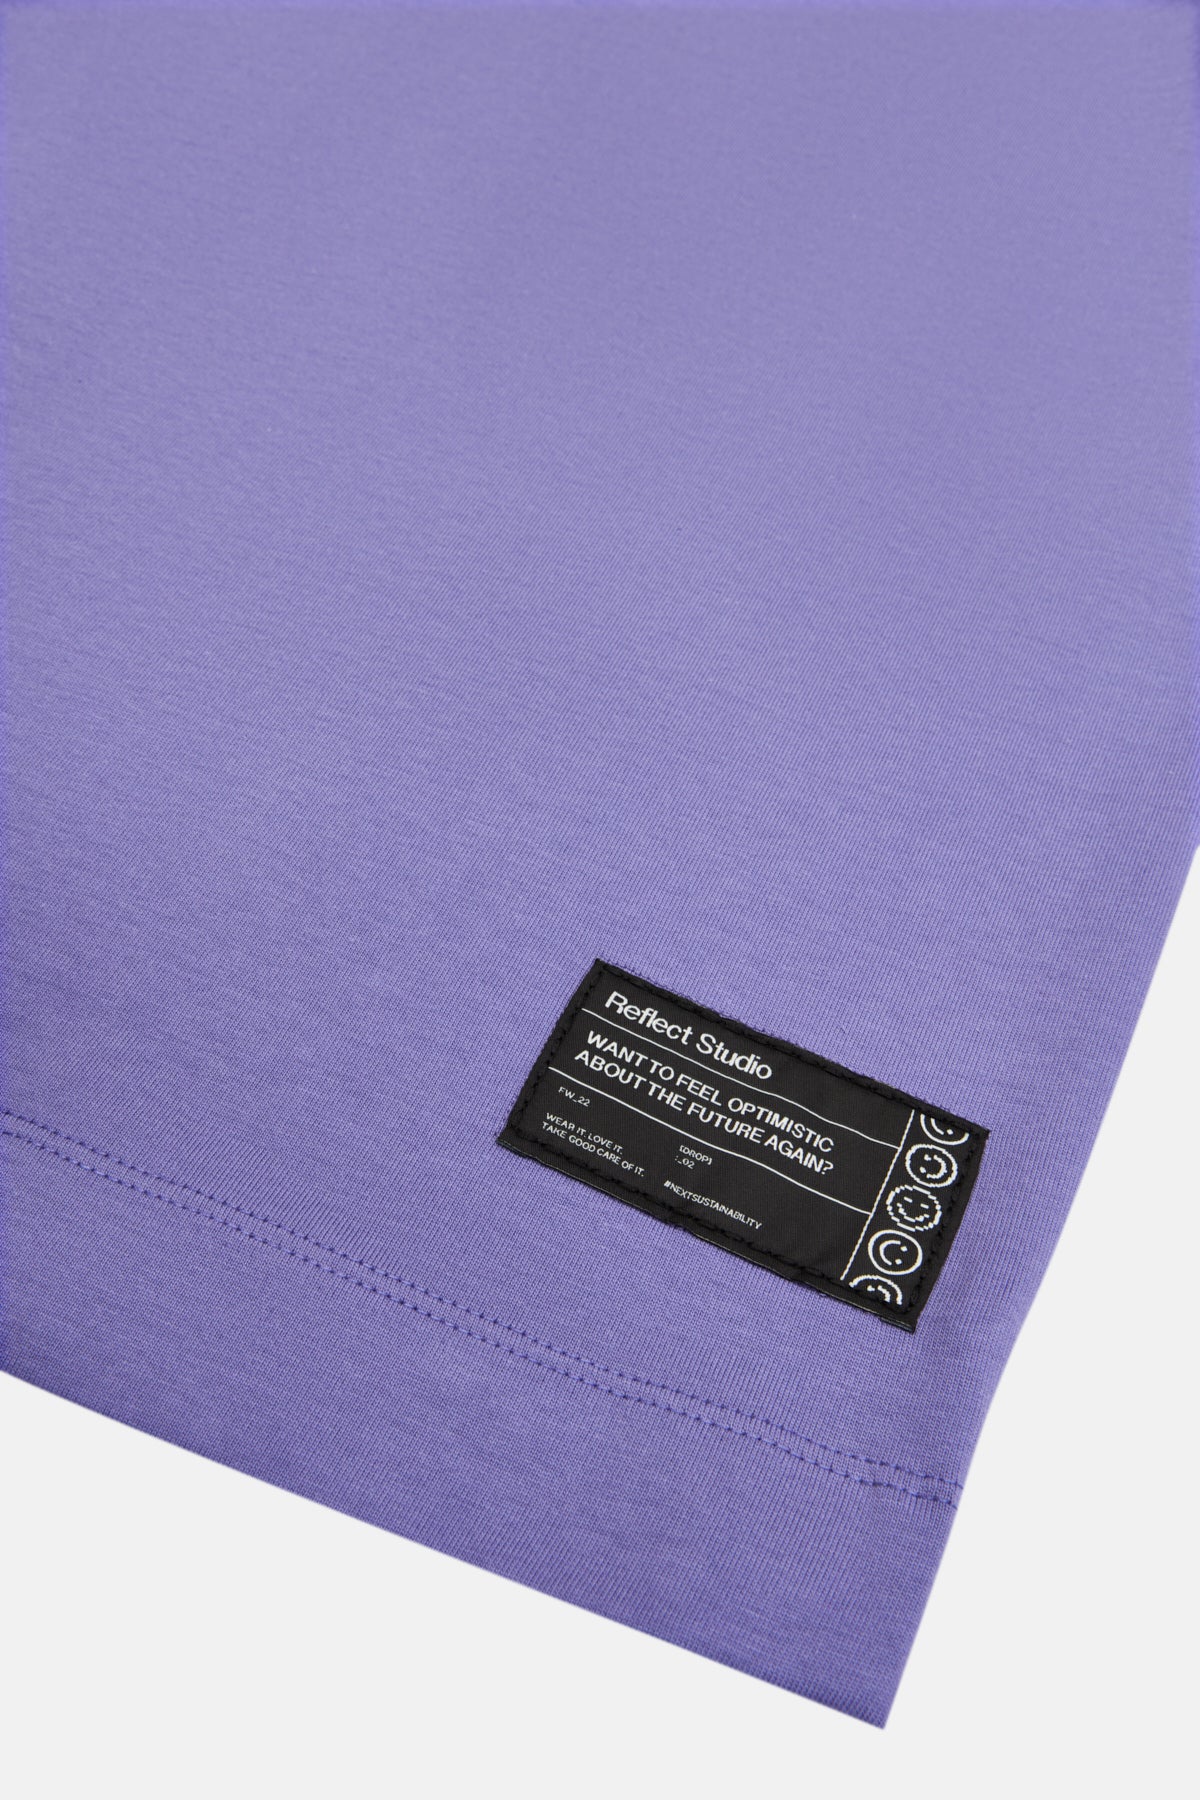 Modernism_V2.0 T-Shirt - Light Purple